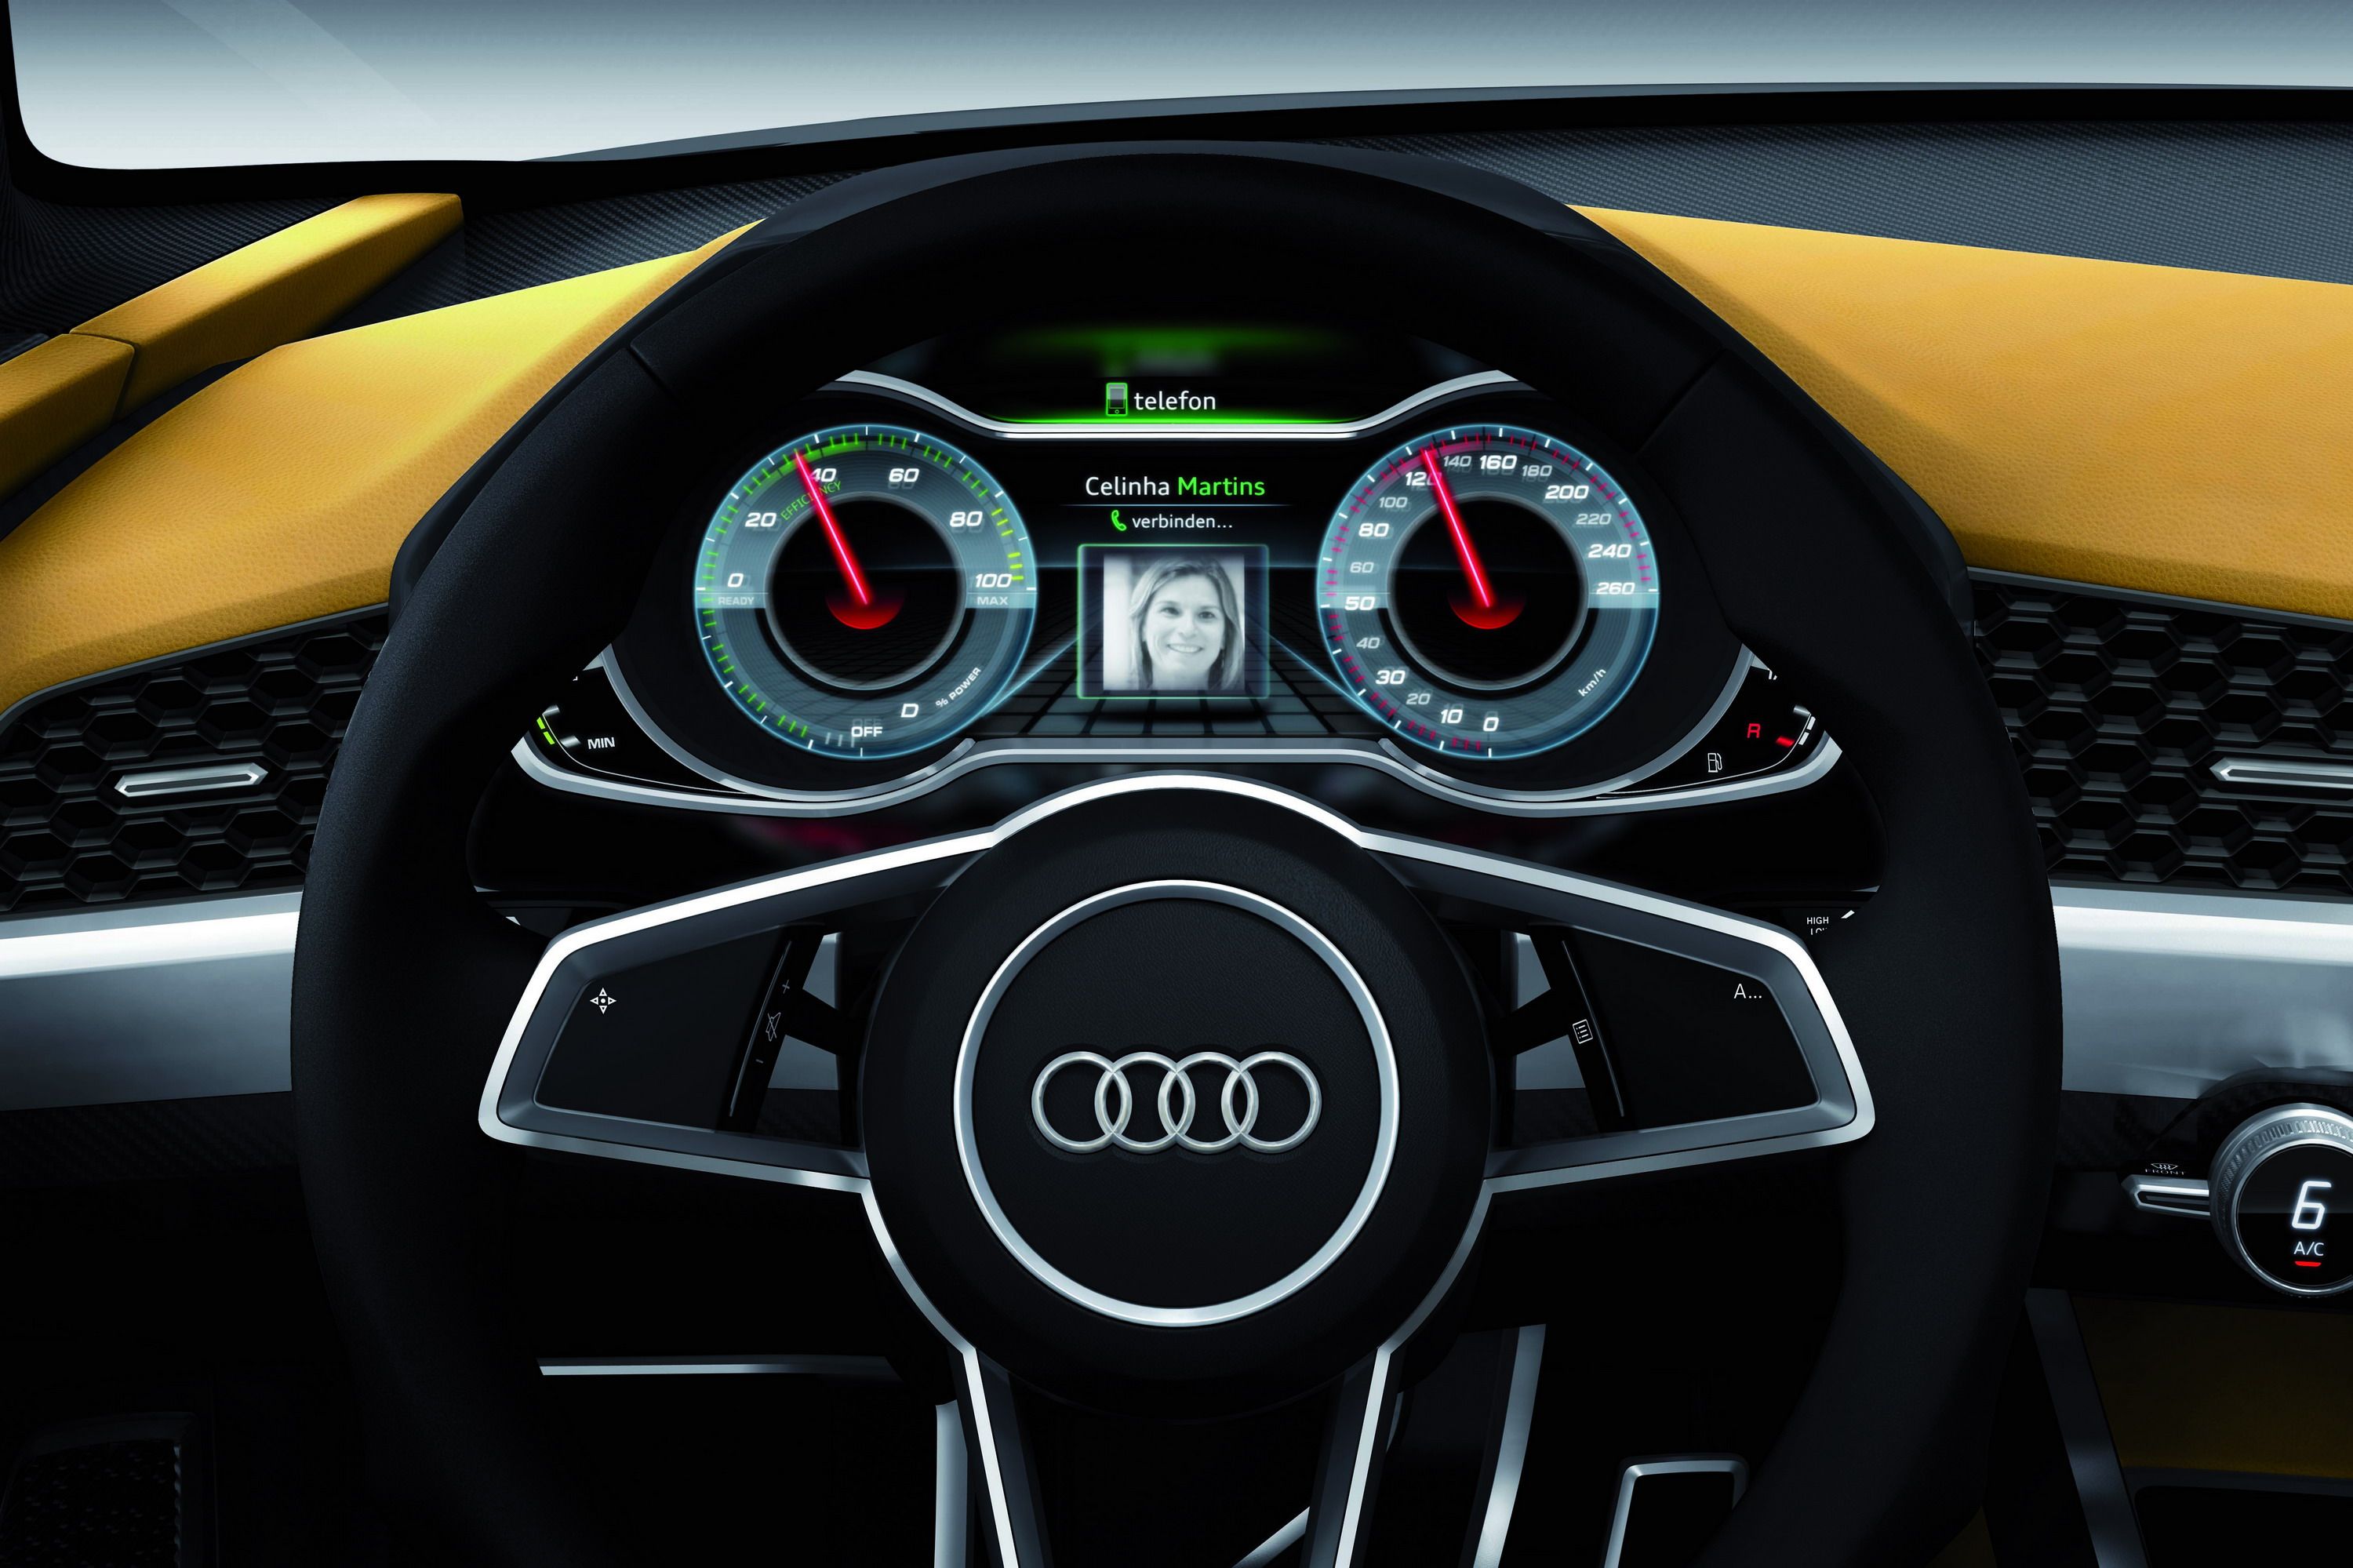 2012 Audi Crosslane Coupe Concept